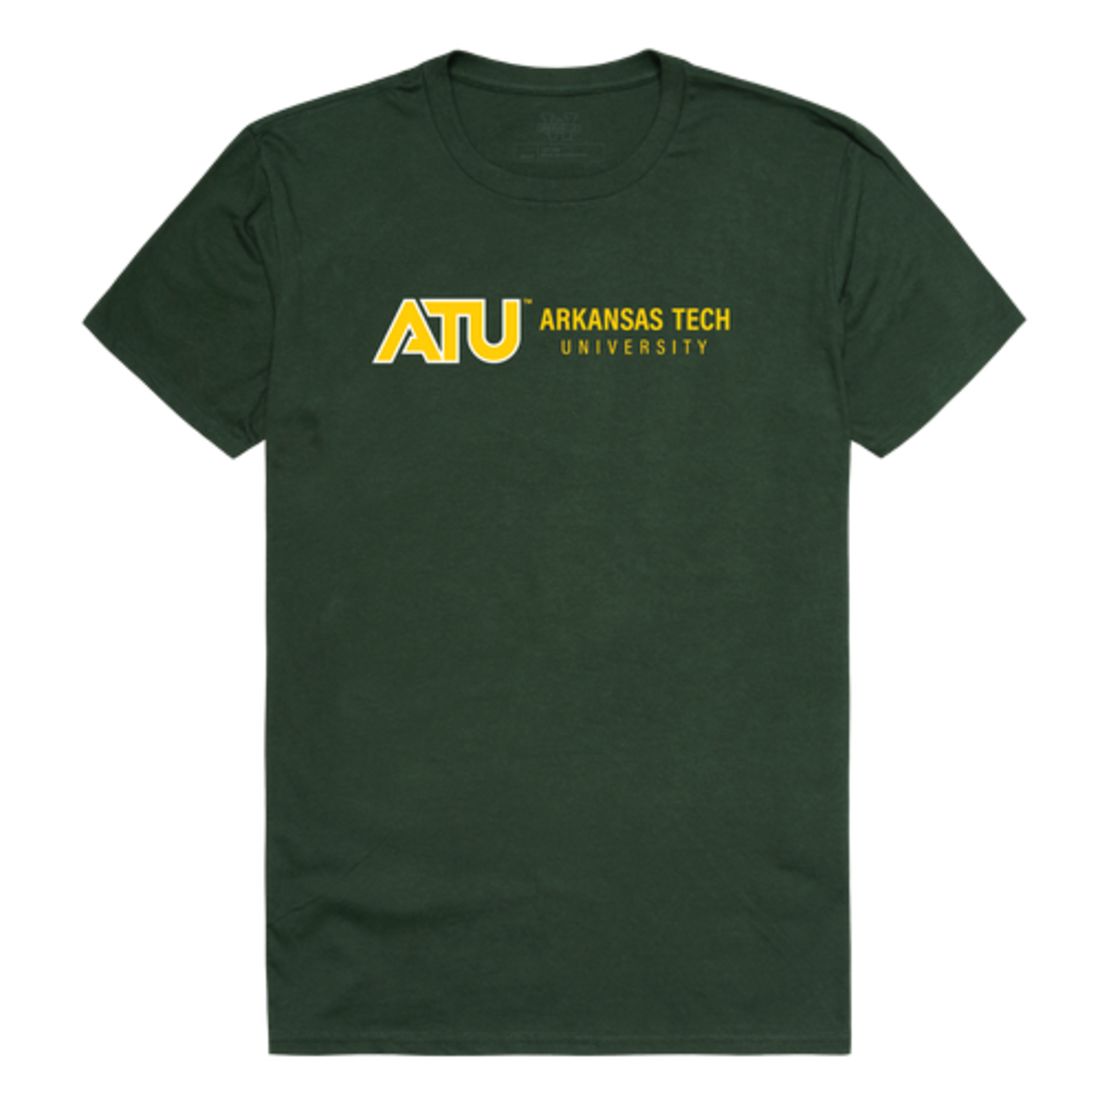 Arkansas Tech University Wonder Boys Institutional T-Shirt Tee